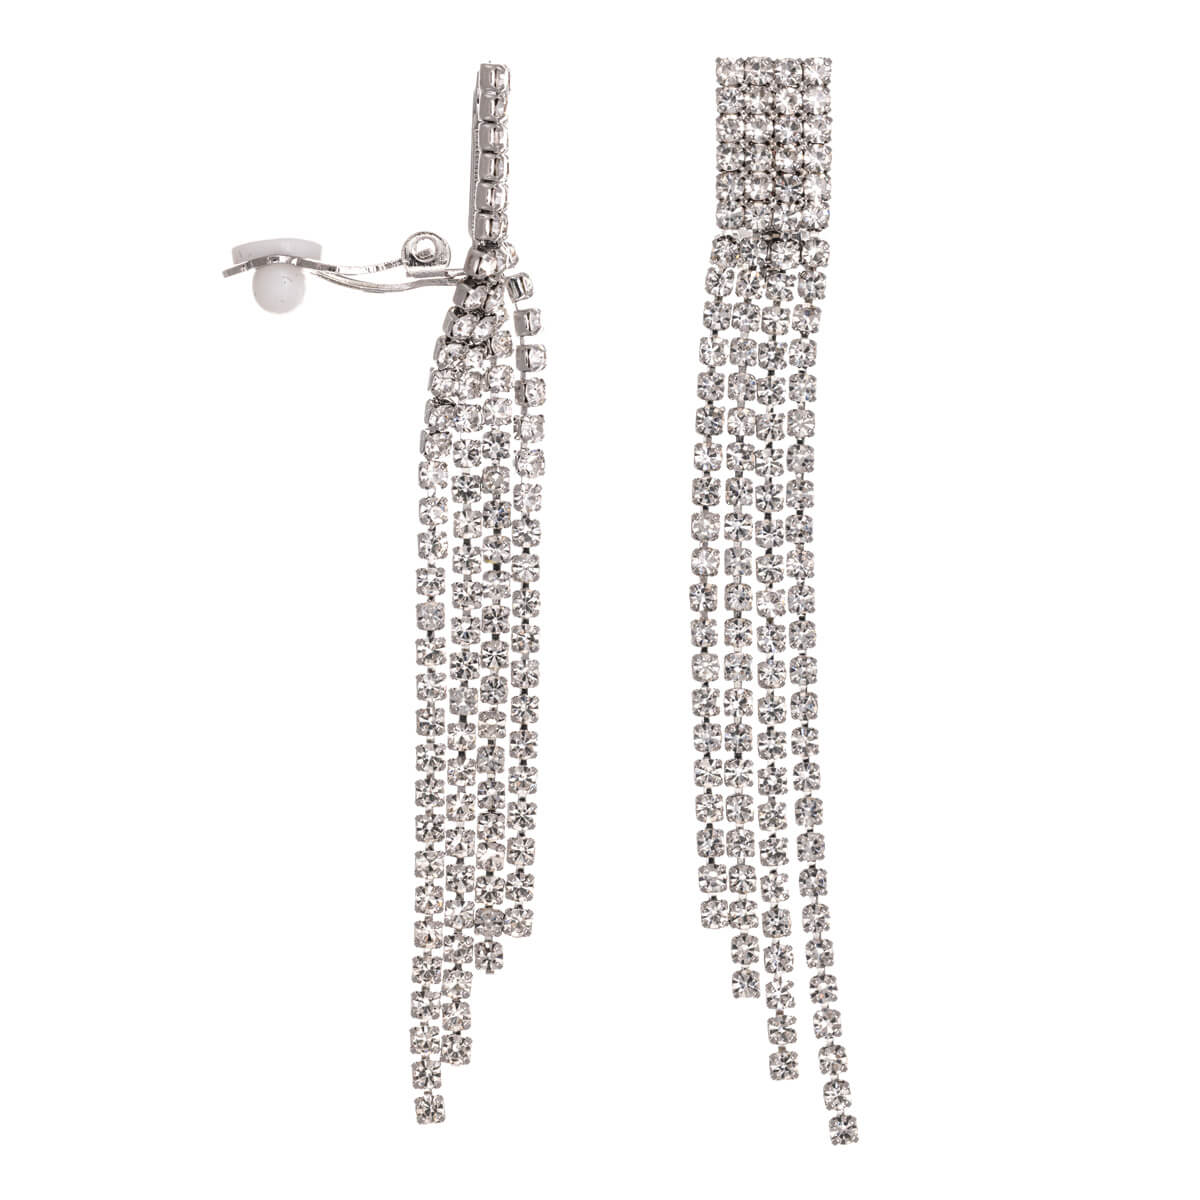 Hanging rhinestone ribbon festive clip-on earrings 4 rows